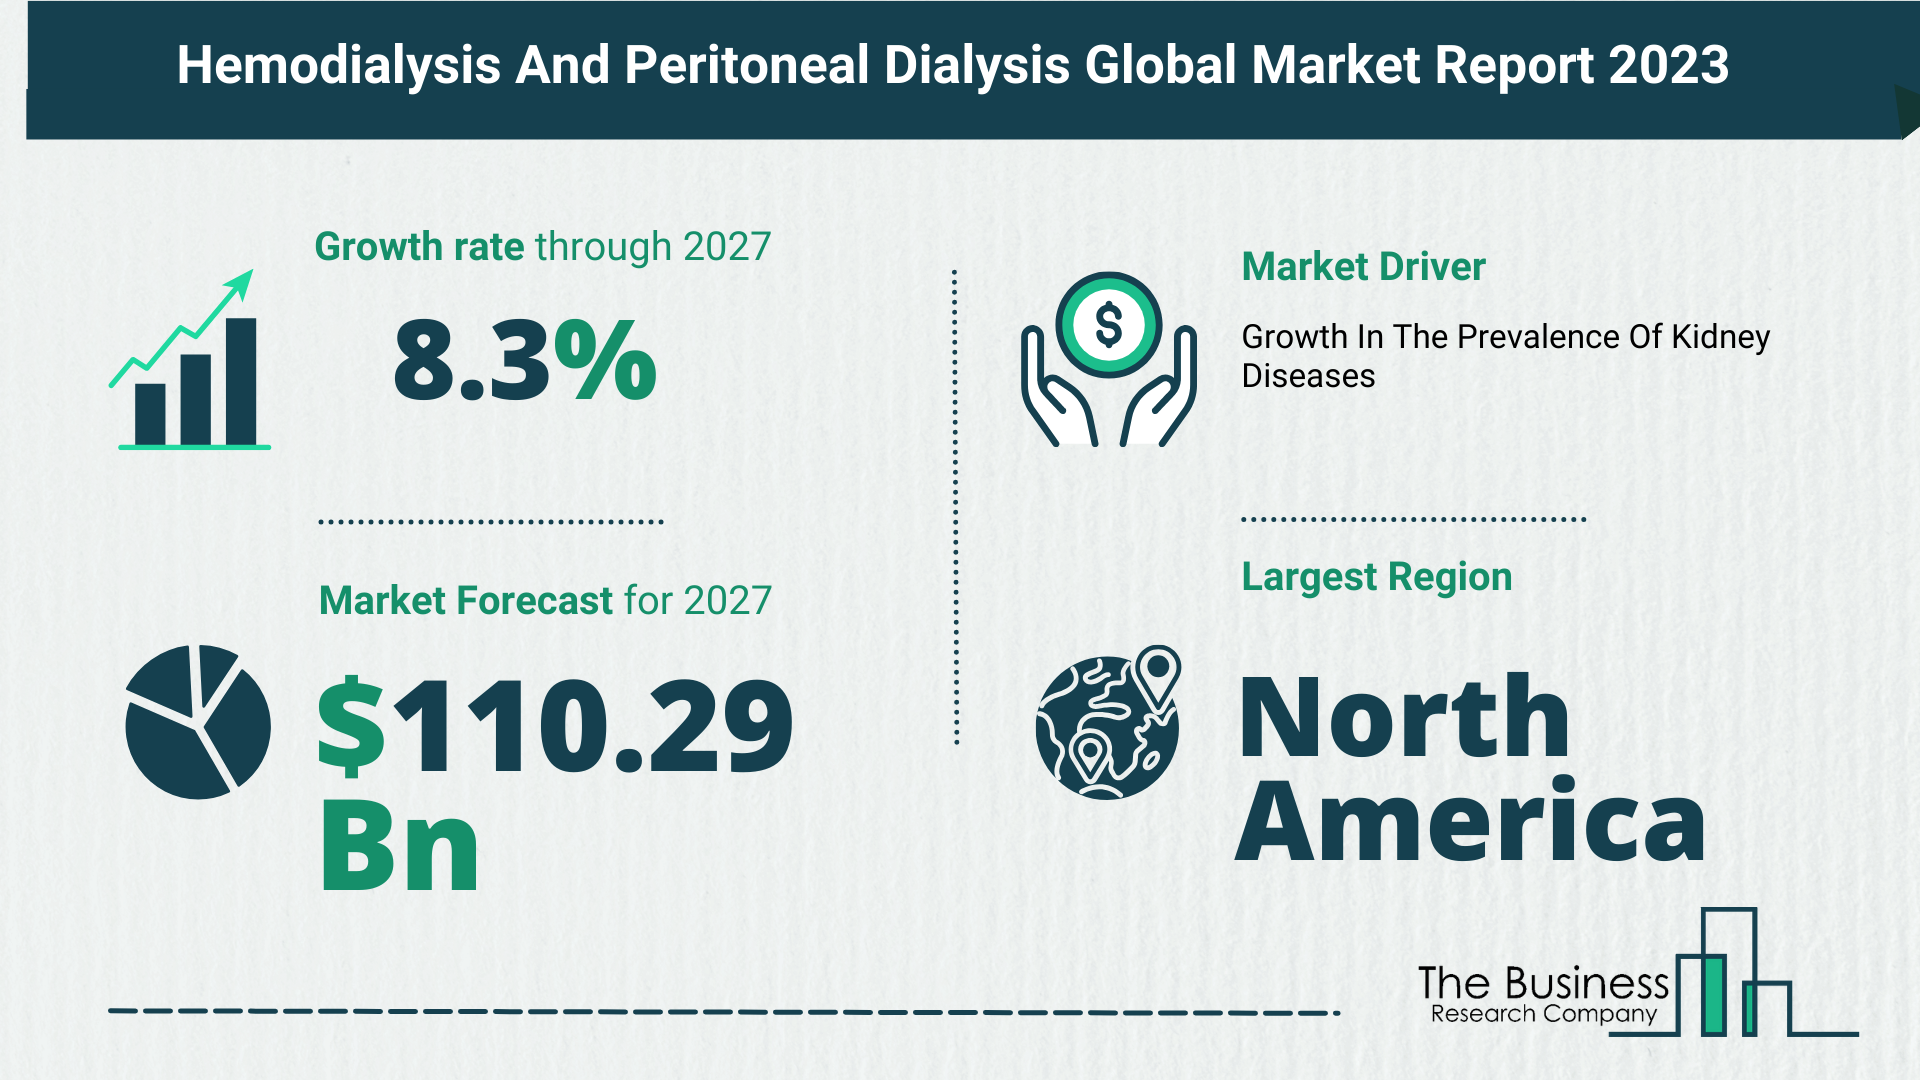 Global Hemodialysis And Peritoneal Dialysis Market